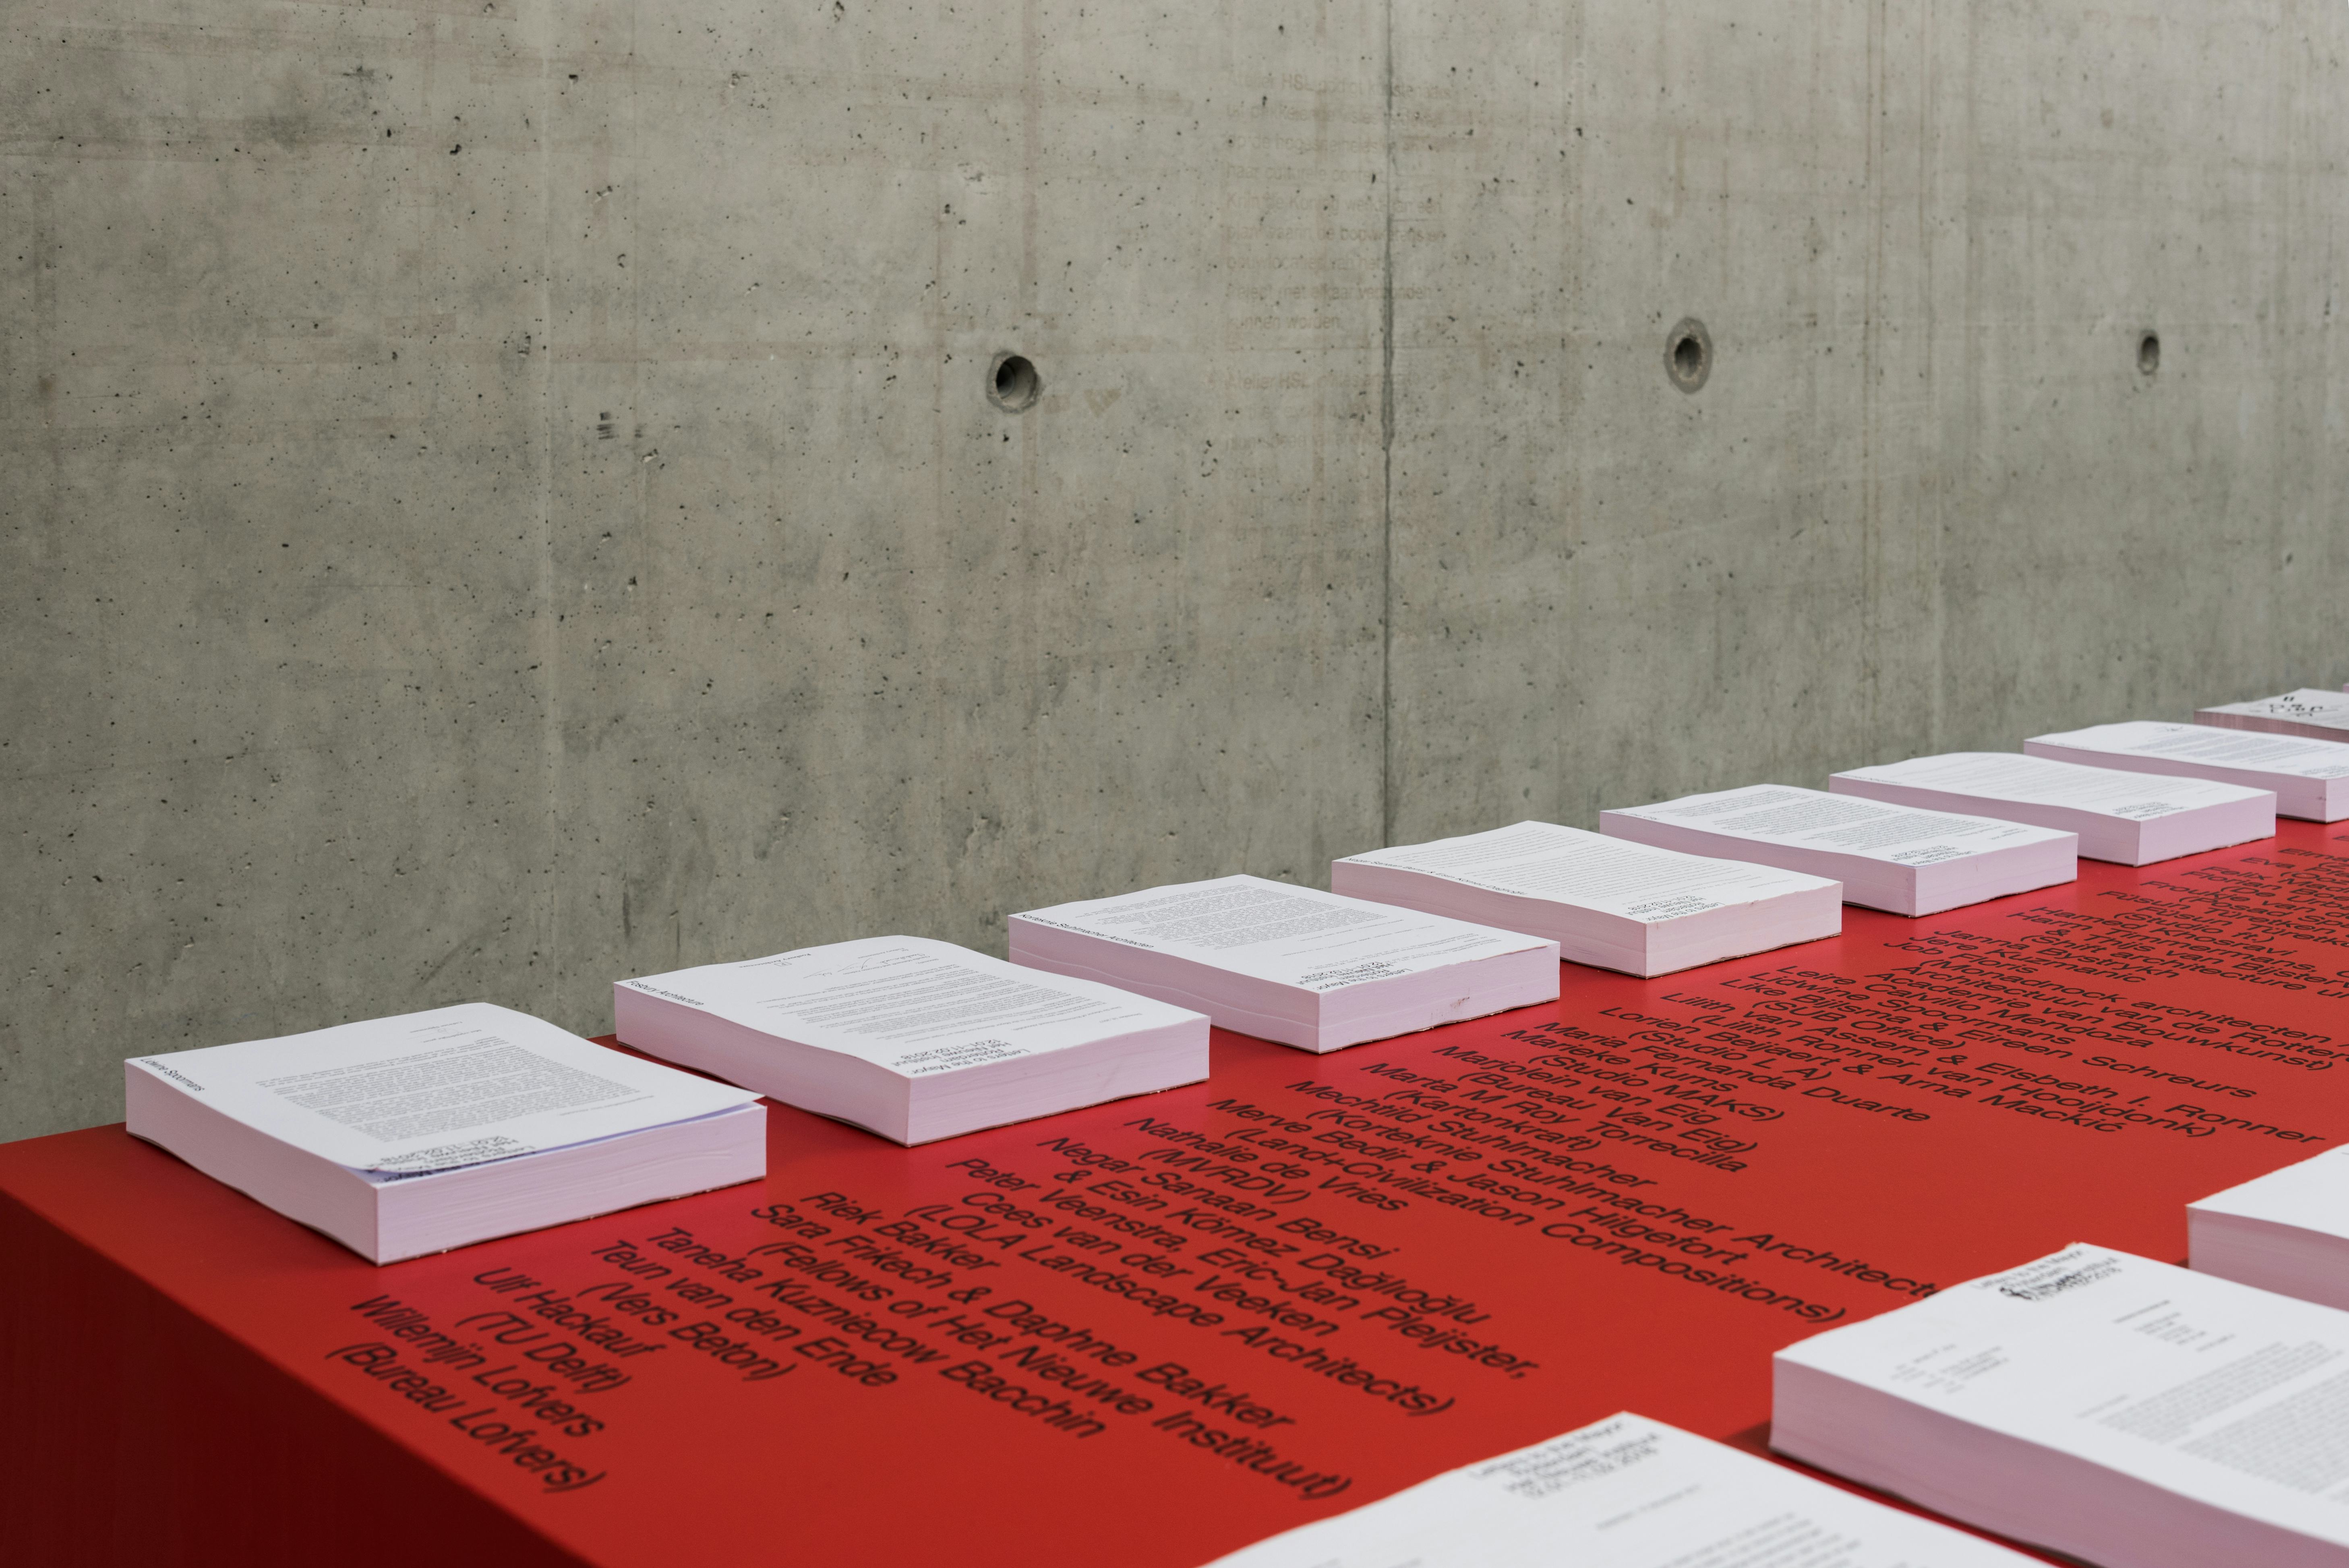 Tentoonstelling Letters to the Mayer in HNI, beeld Petra van Ree